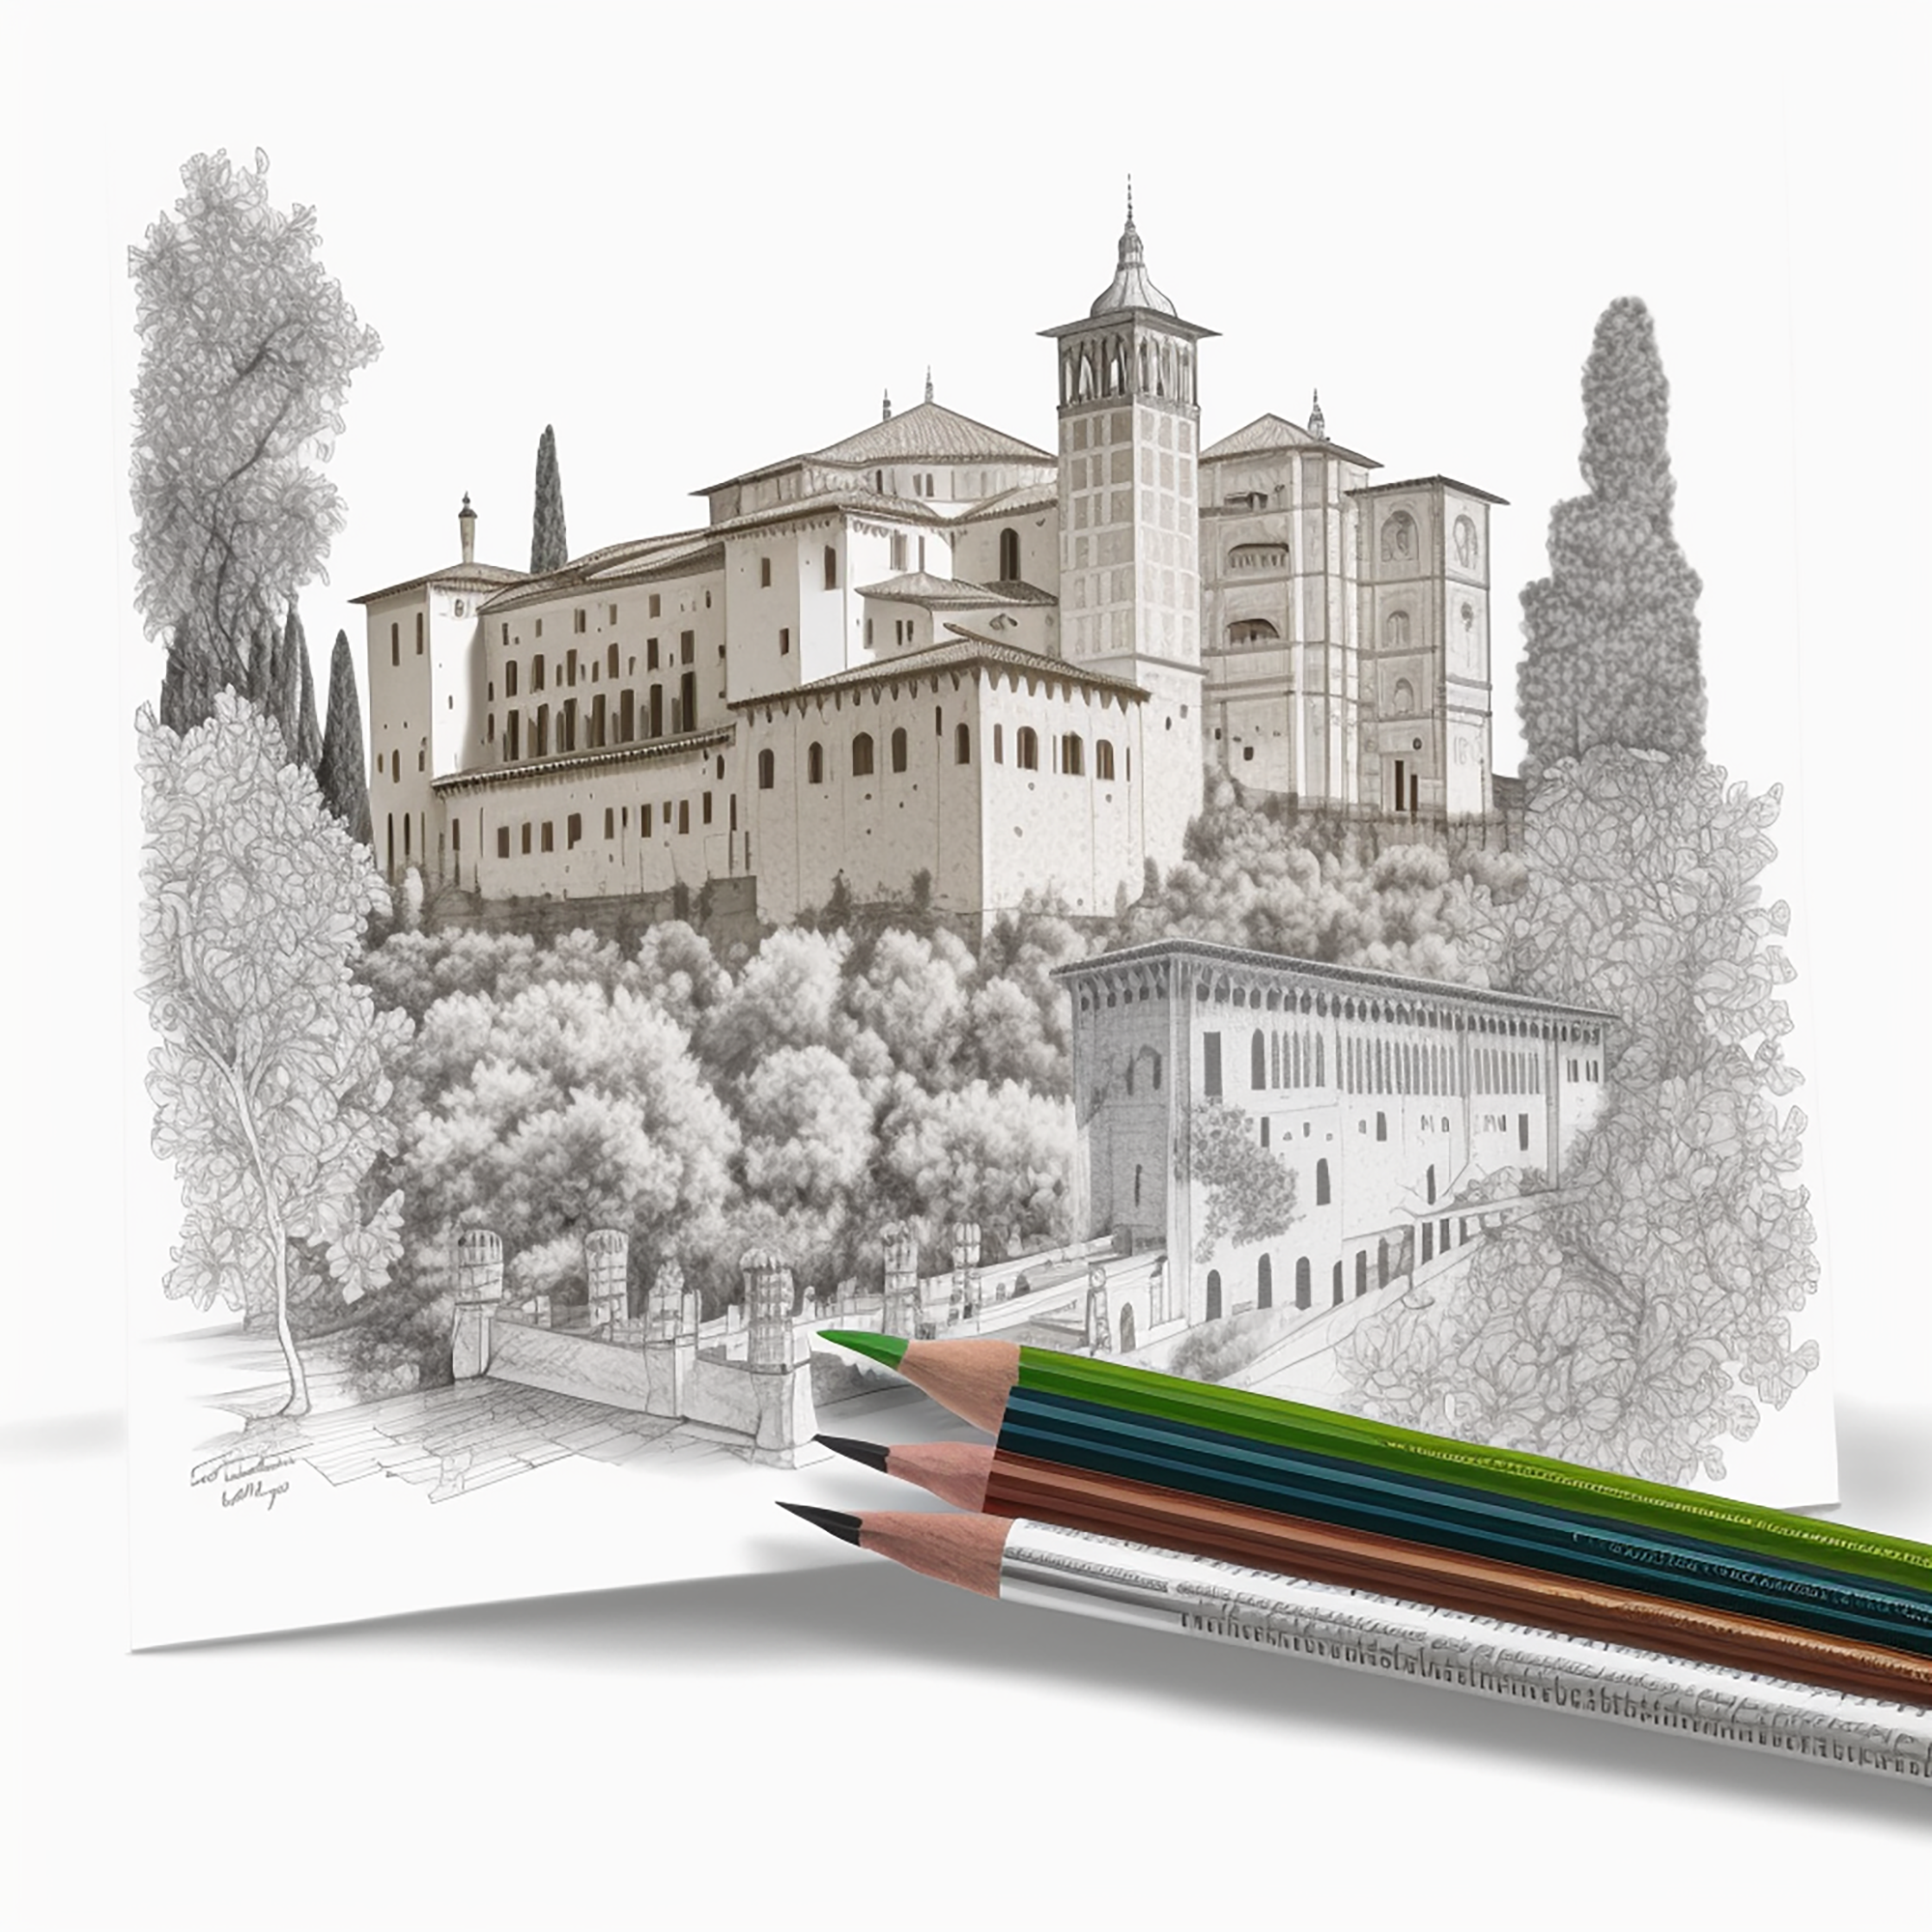 3201-The Alhambra in Granada Spain, coloring book